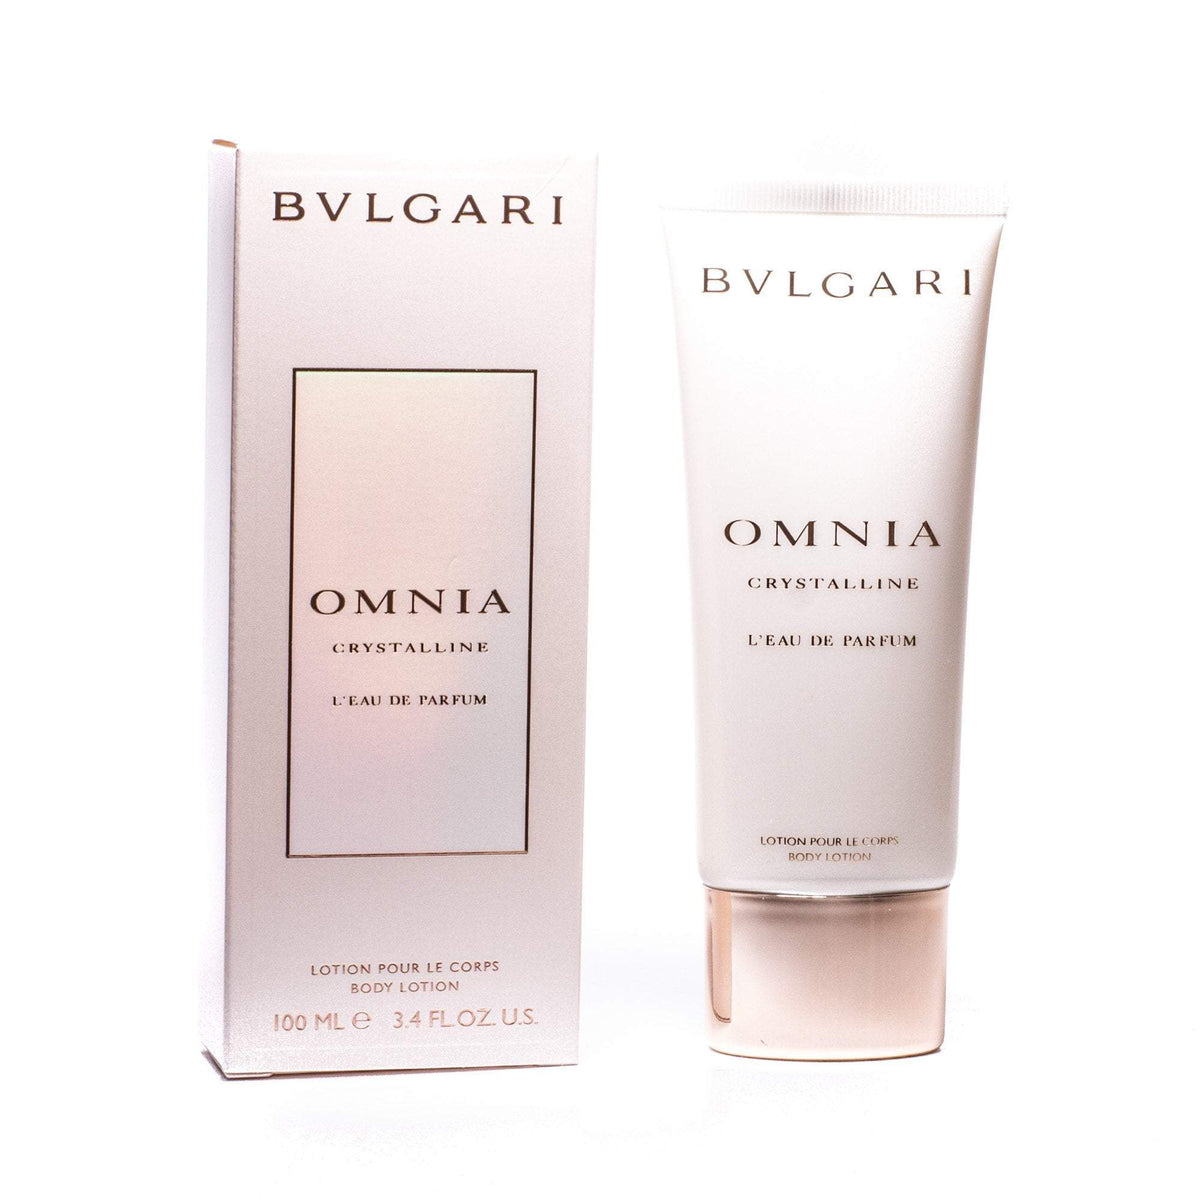 Omnia Crystalline Body Lotion for Women by Bvlgari 3.4 oz.